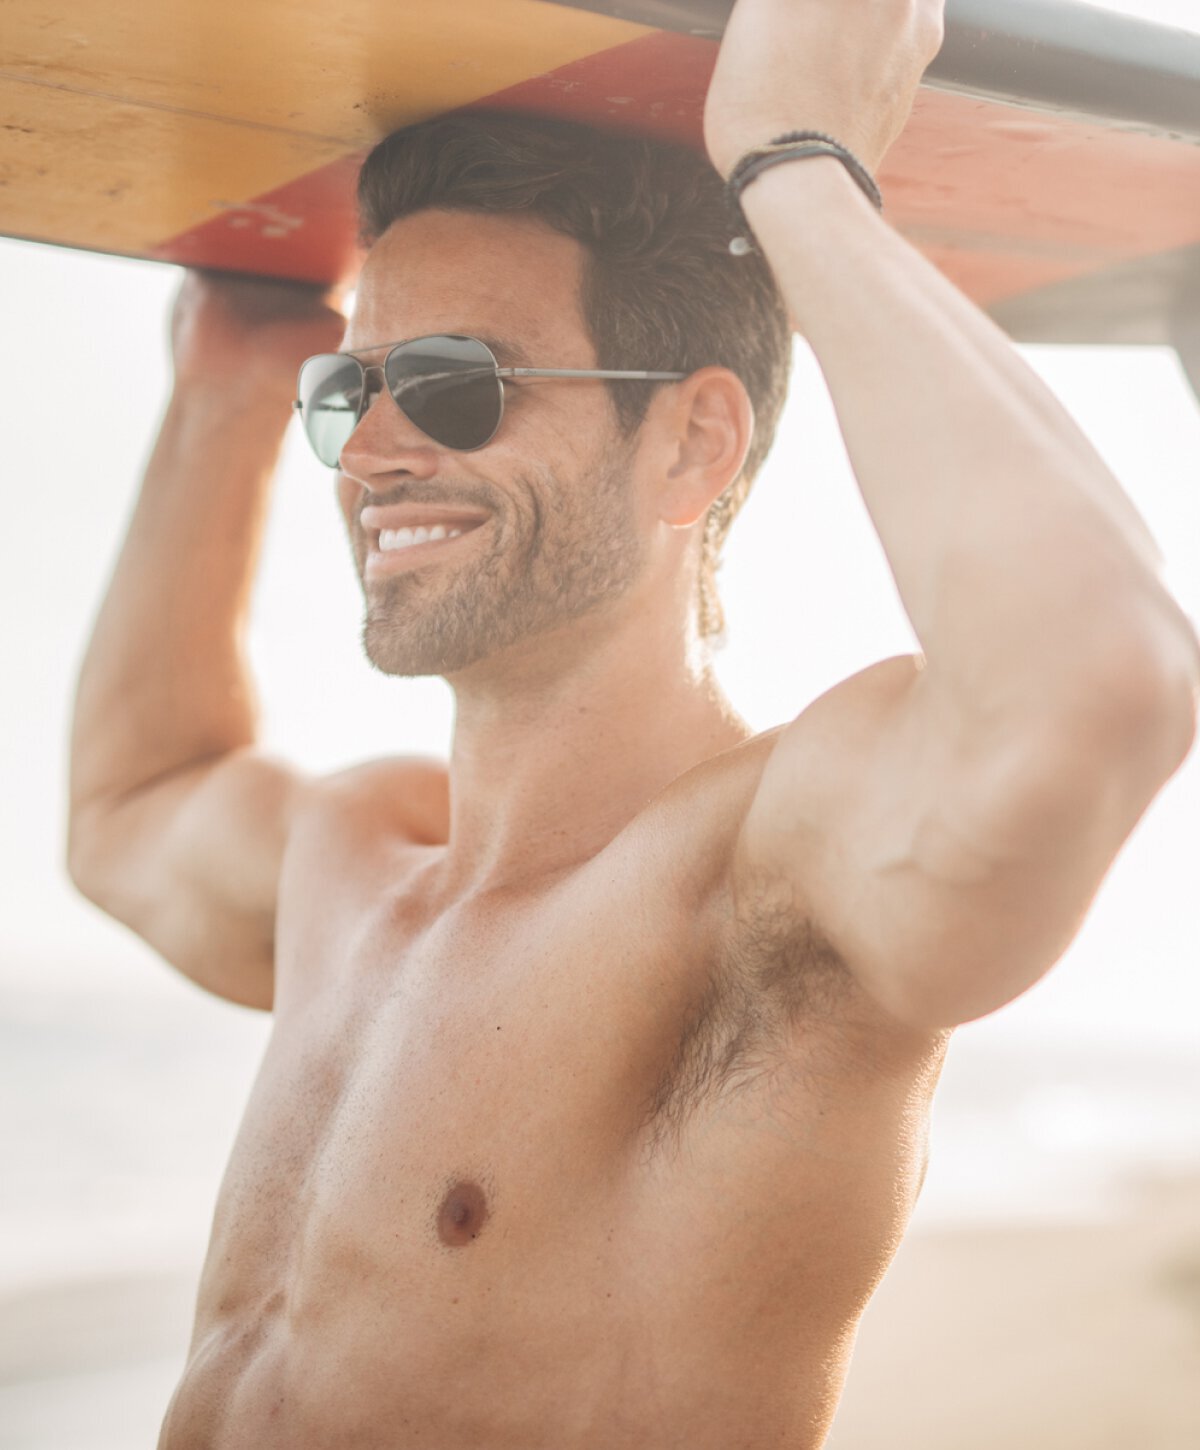 Austin gynecomastia surgery model holding a surfboard above his head